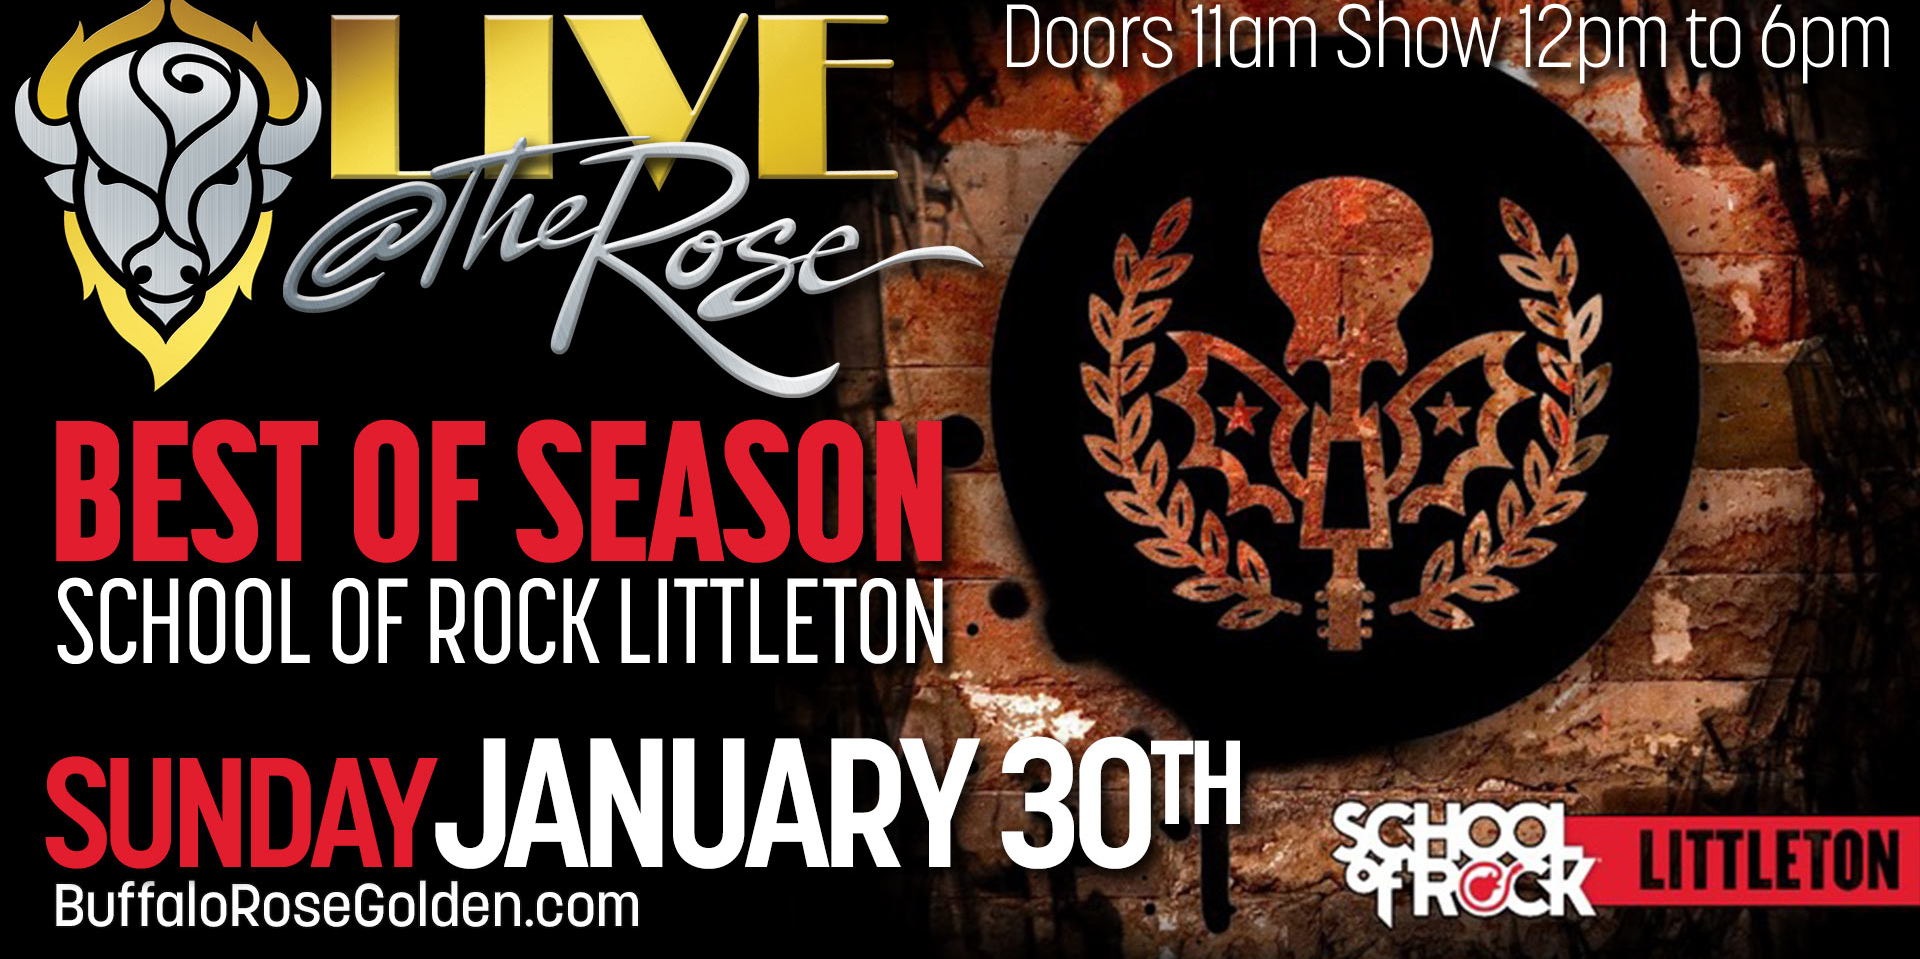 School Of Rock Littleton promotional image